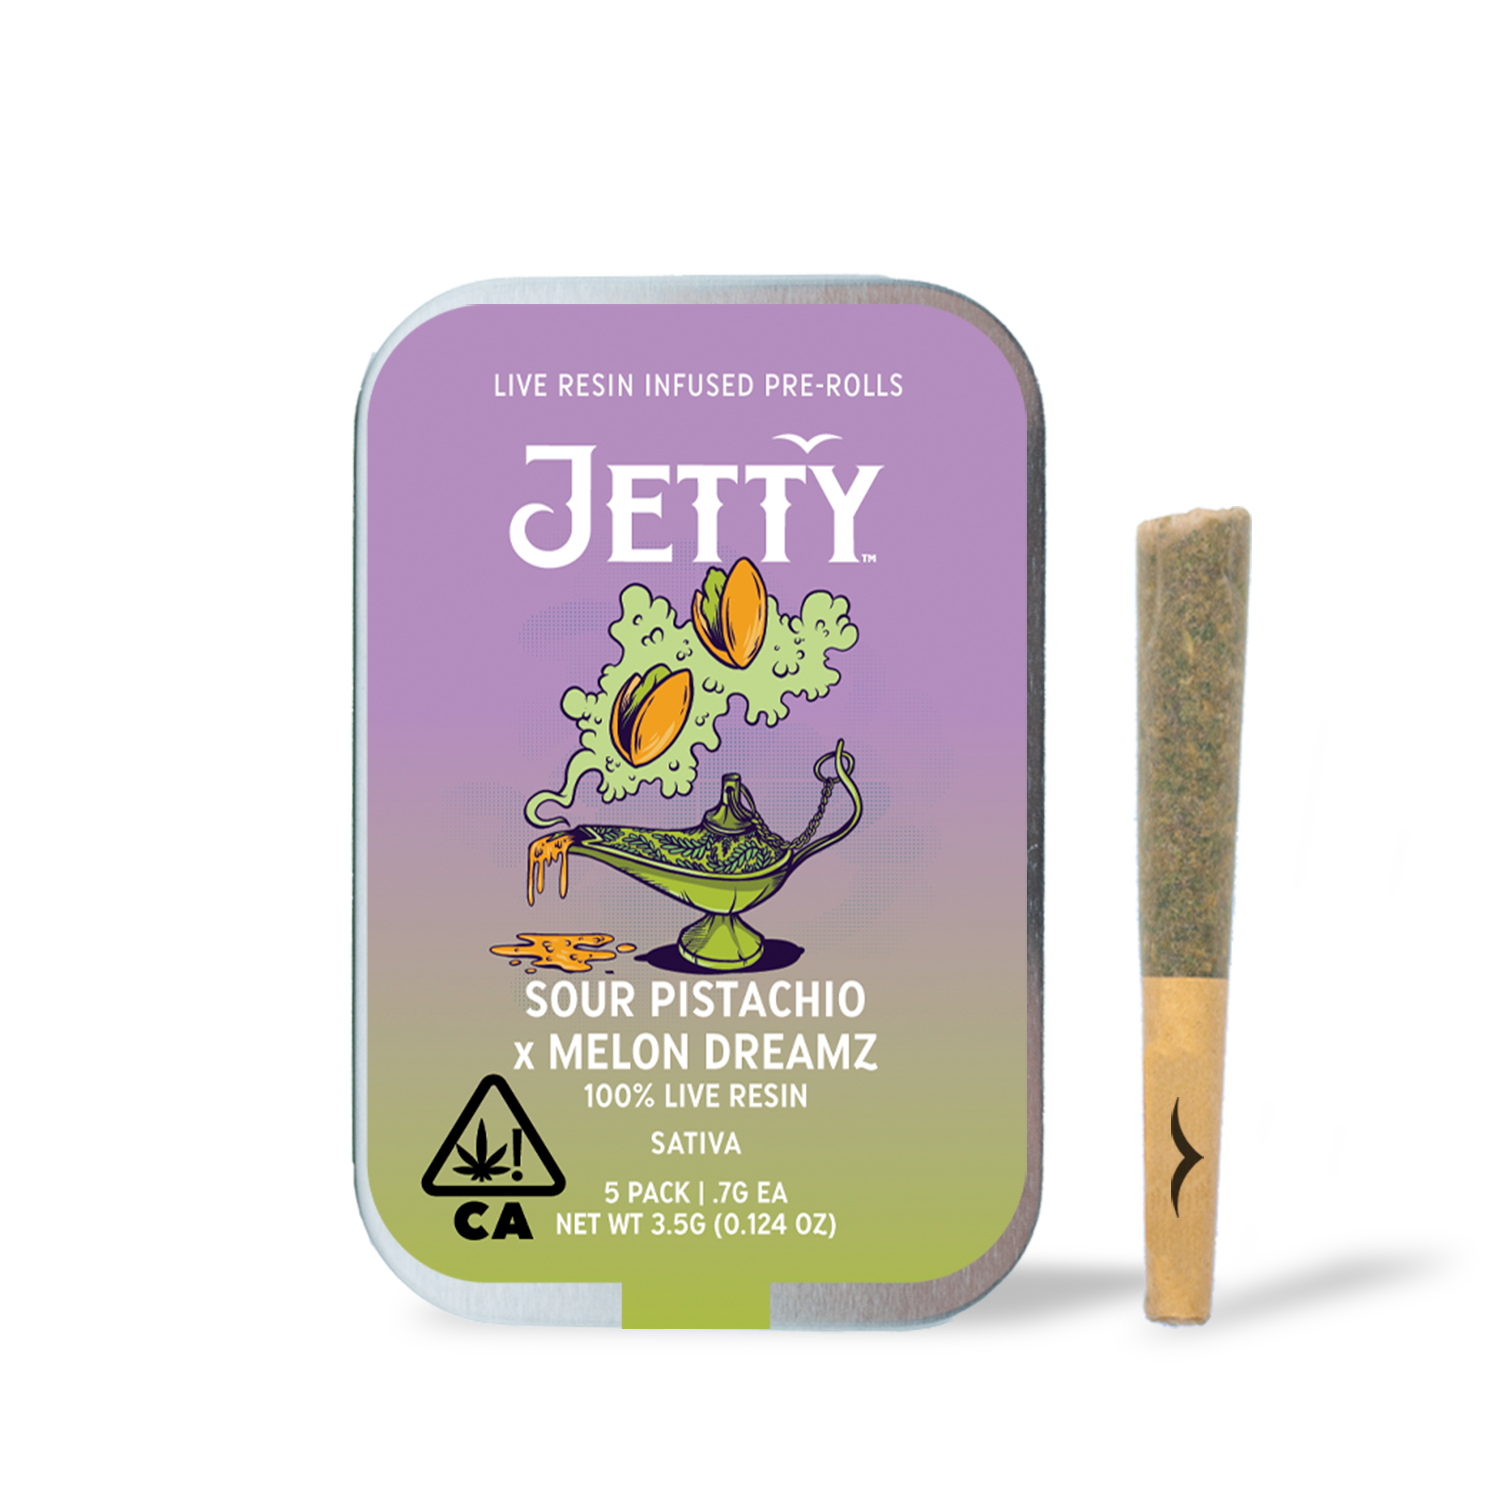 A photograph of Jetty Live Resin Preroll Sour Pistachio x Melon Dreamz 5pk